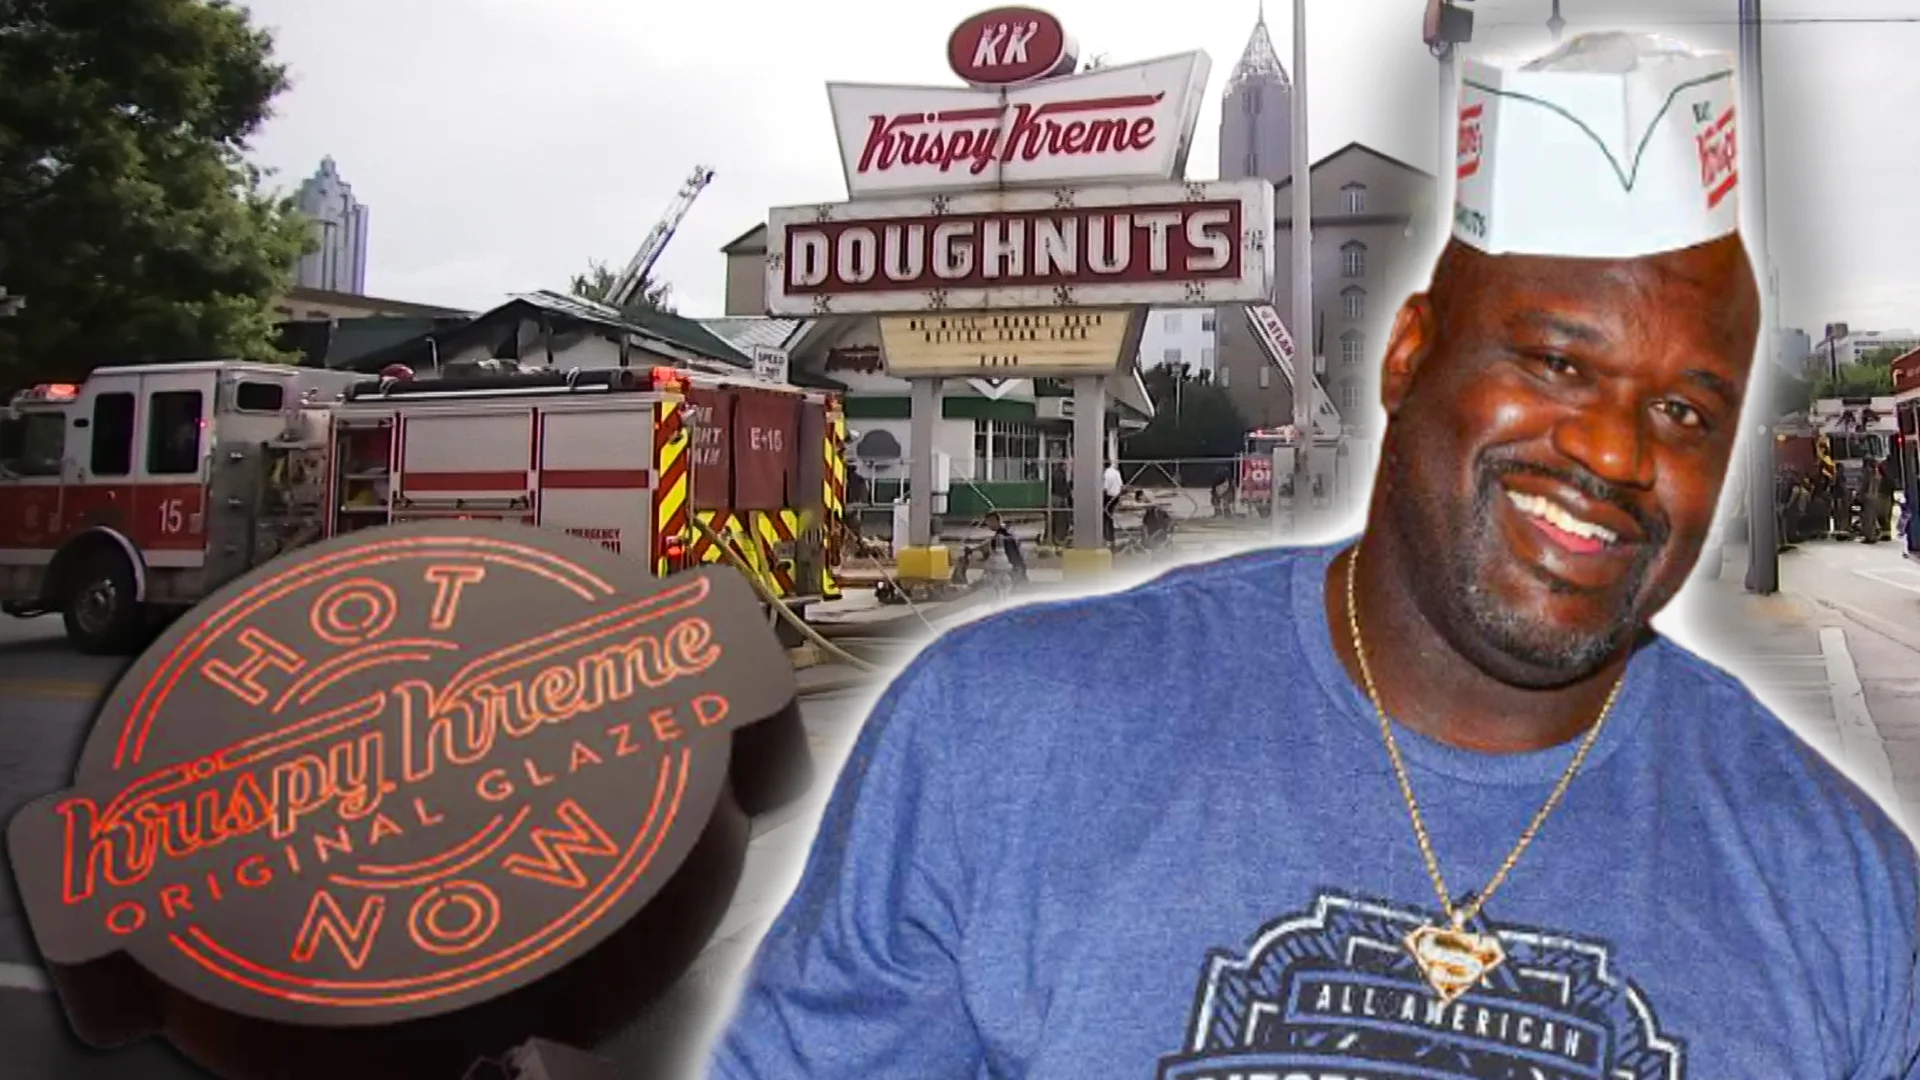 Shaq Owns A Krispy Kreme And Plans To Rebuild His Atlanta Based Donut Location For $1.4M